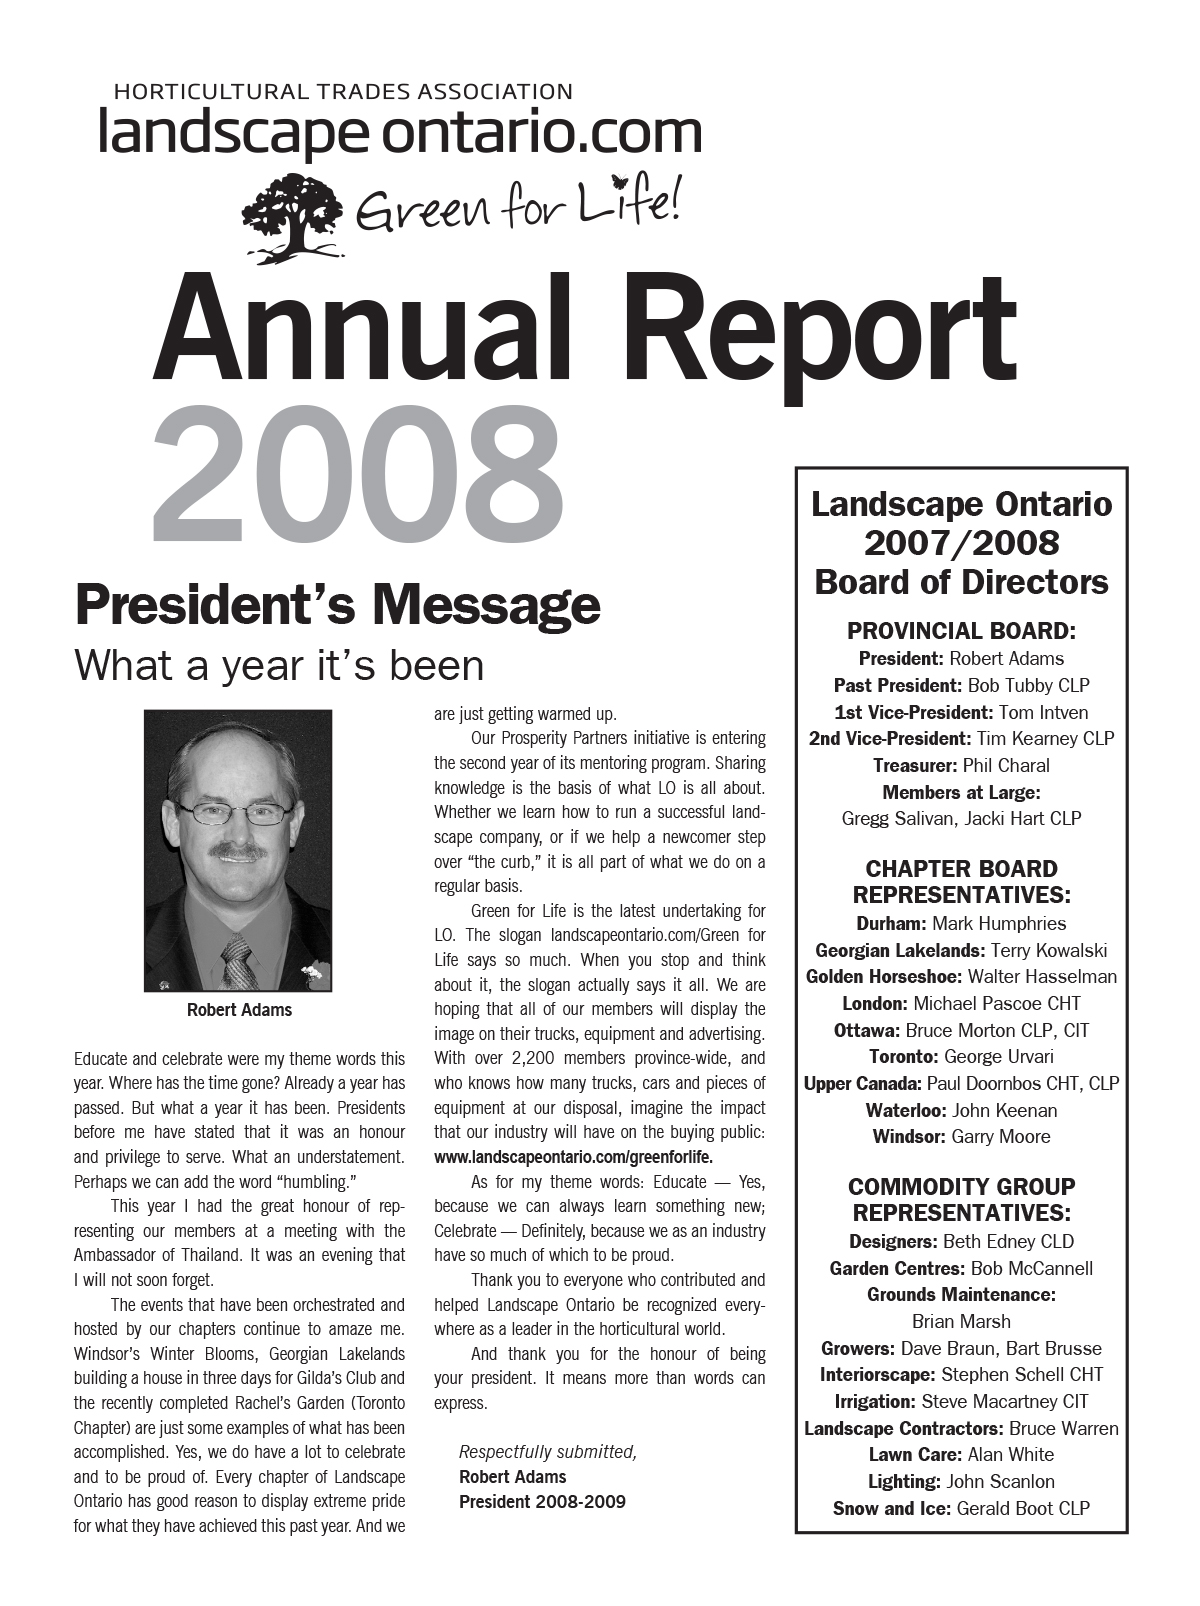 2009 annual report cover